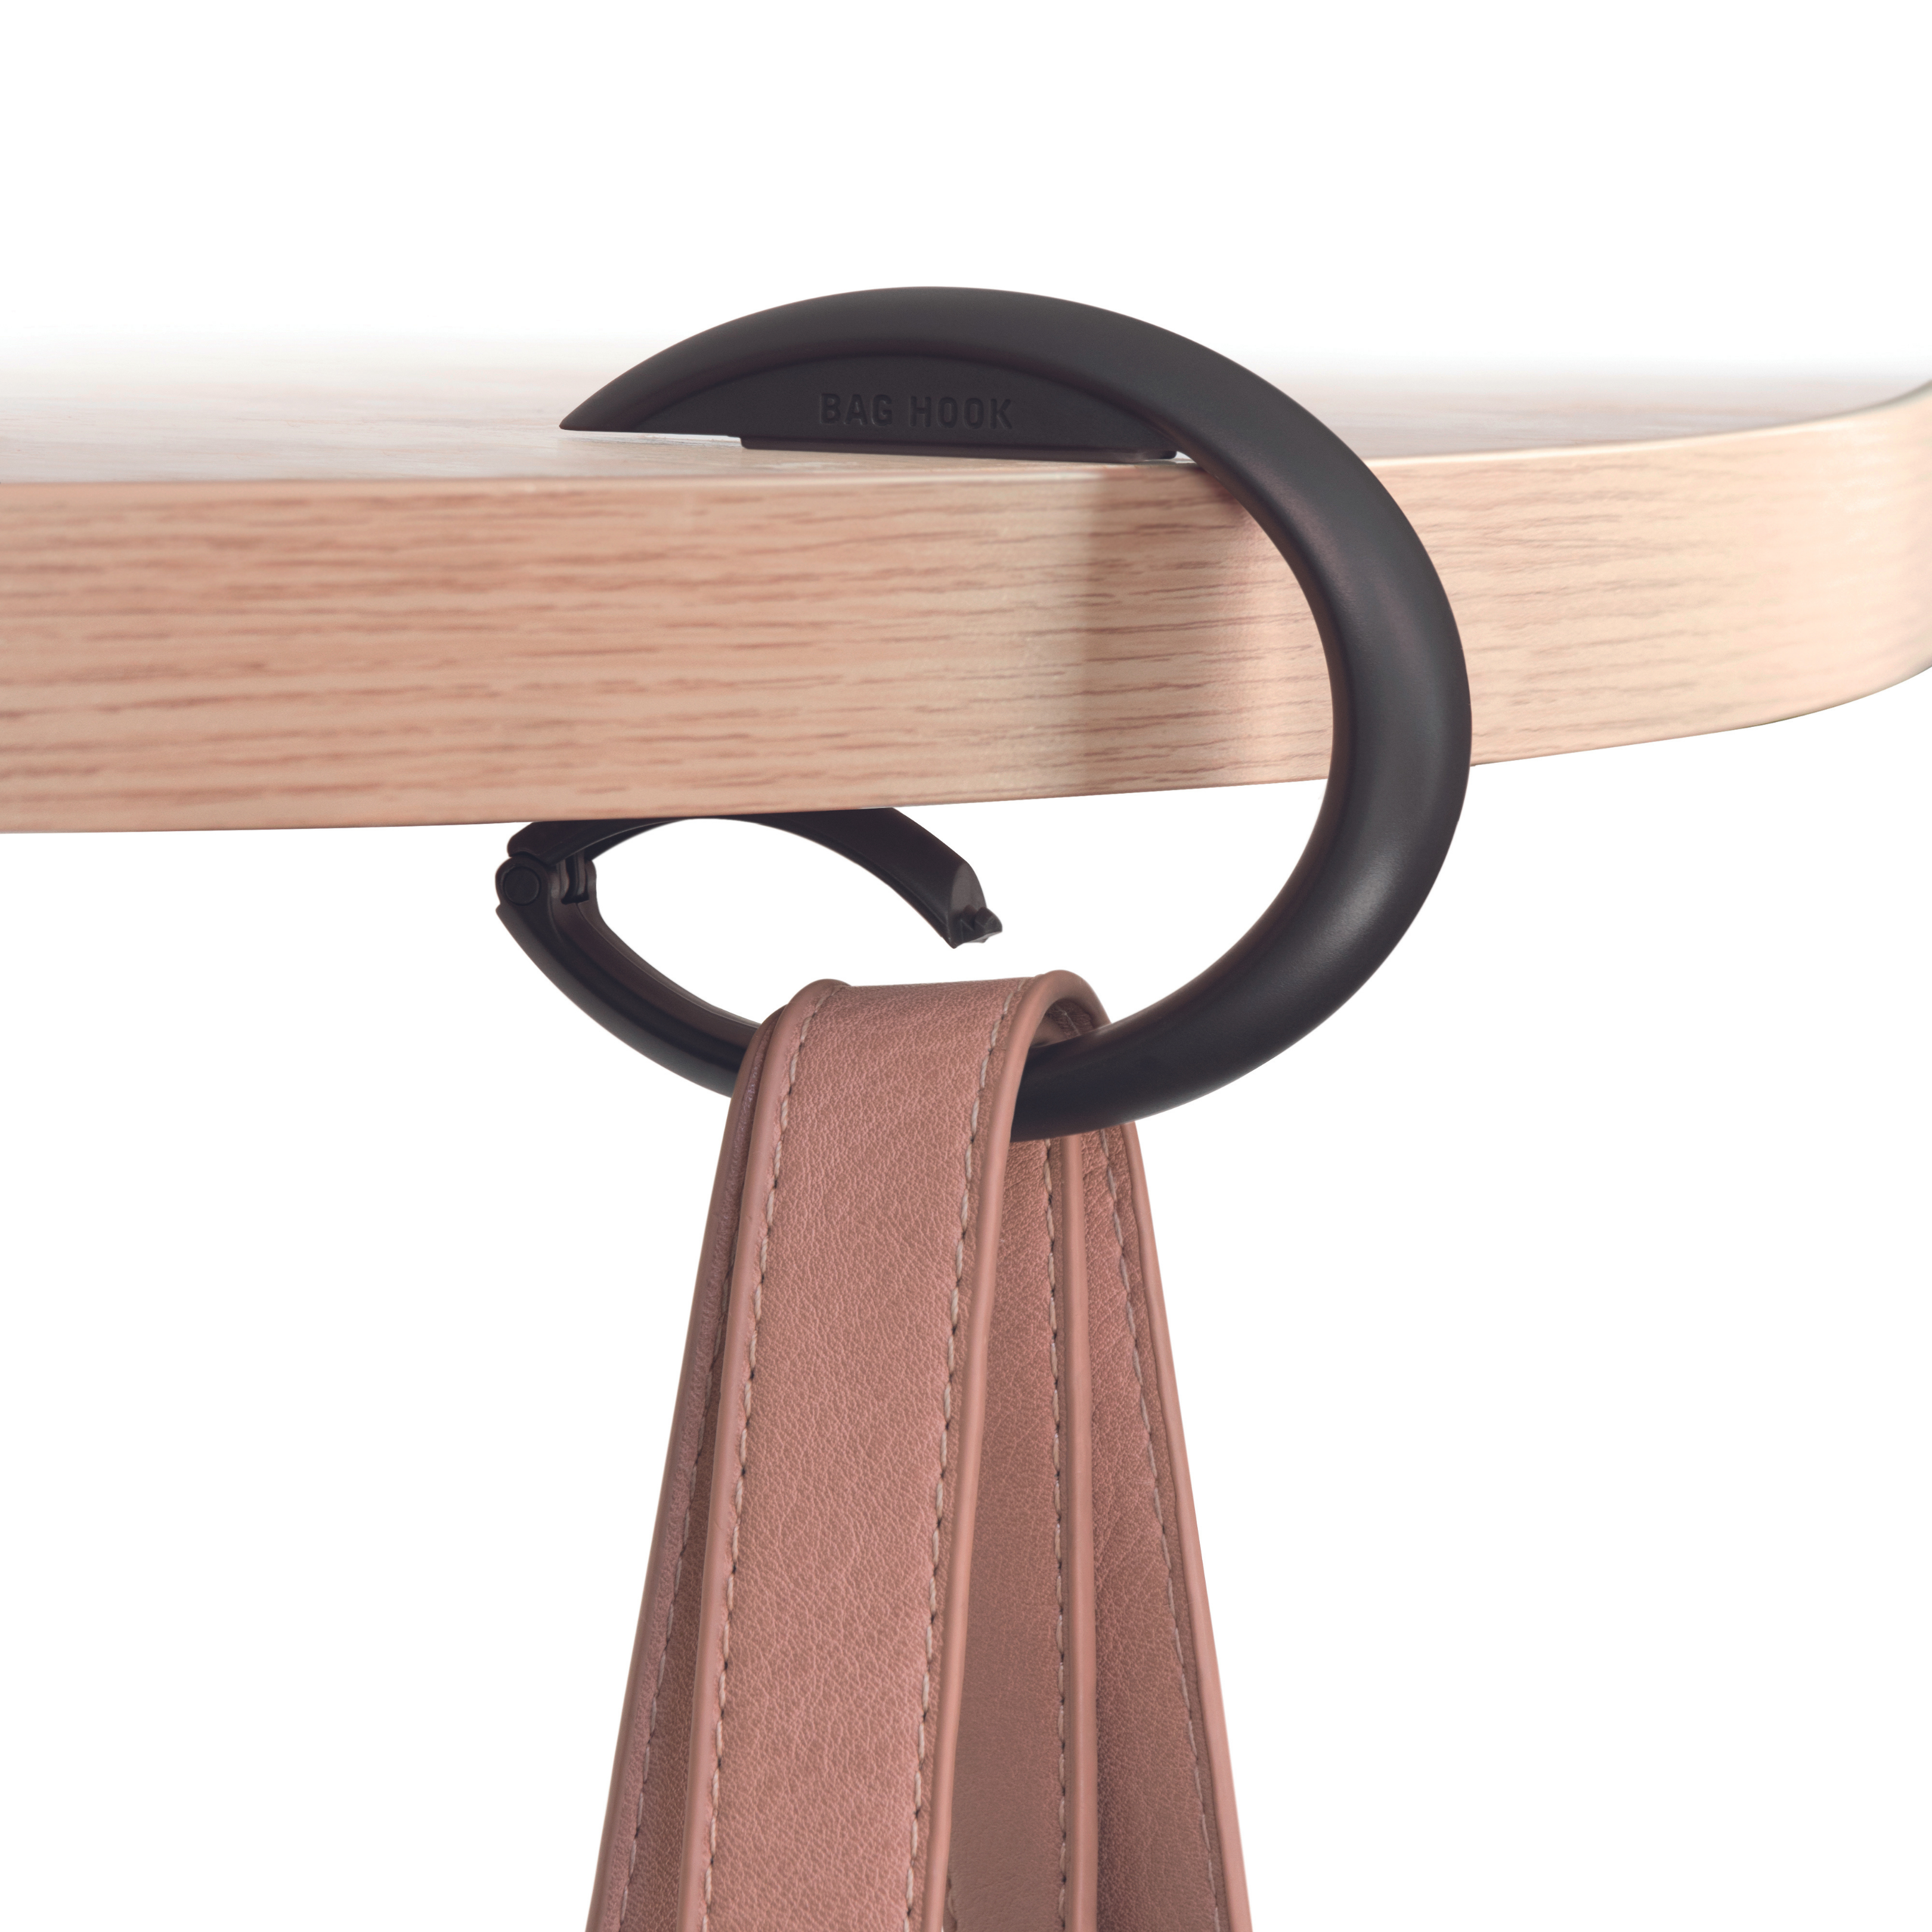 FLORAL ROUND FOLDABLE Table Hook Bag Handbag Hanger Holder Tote Purse Metal  AU $5.89 - PicClick AU